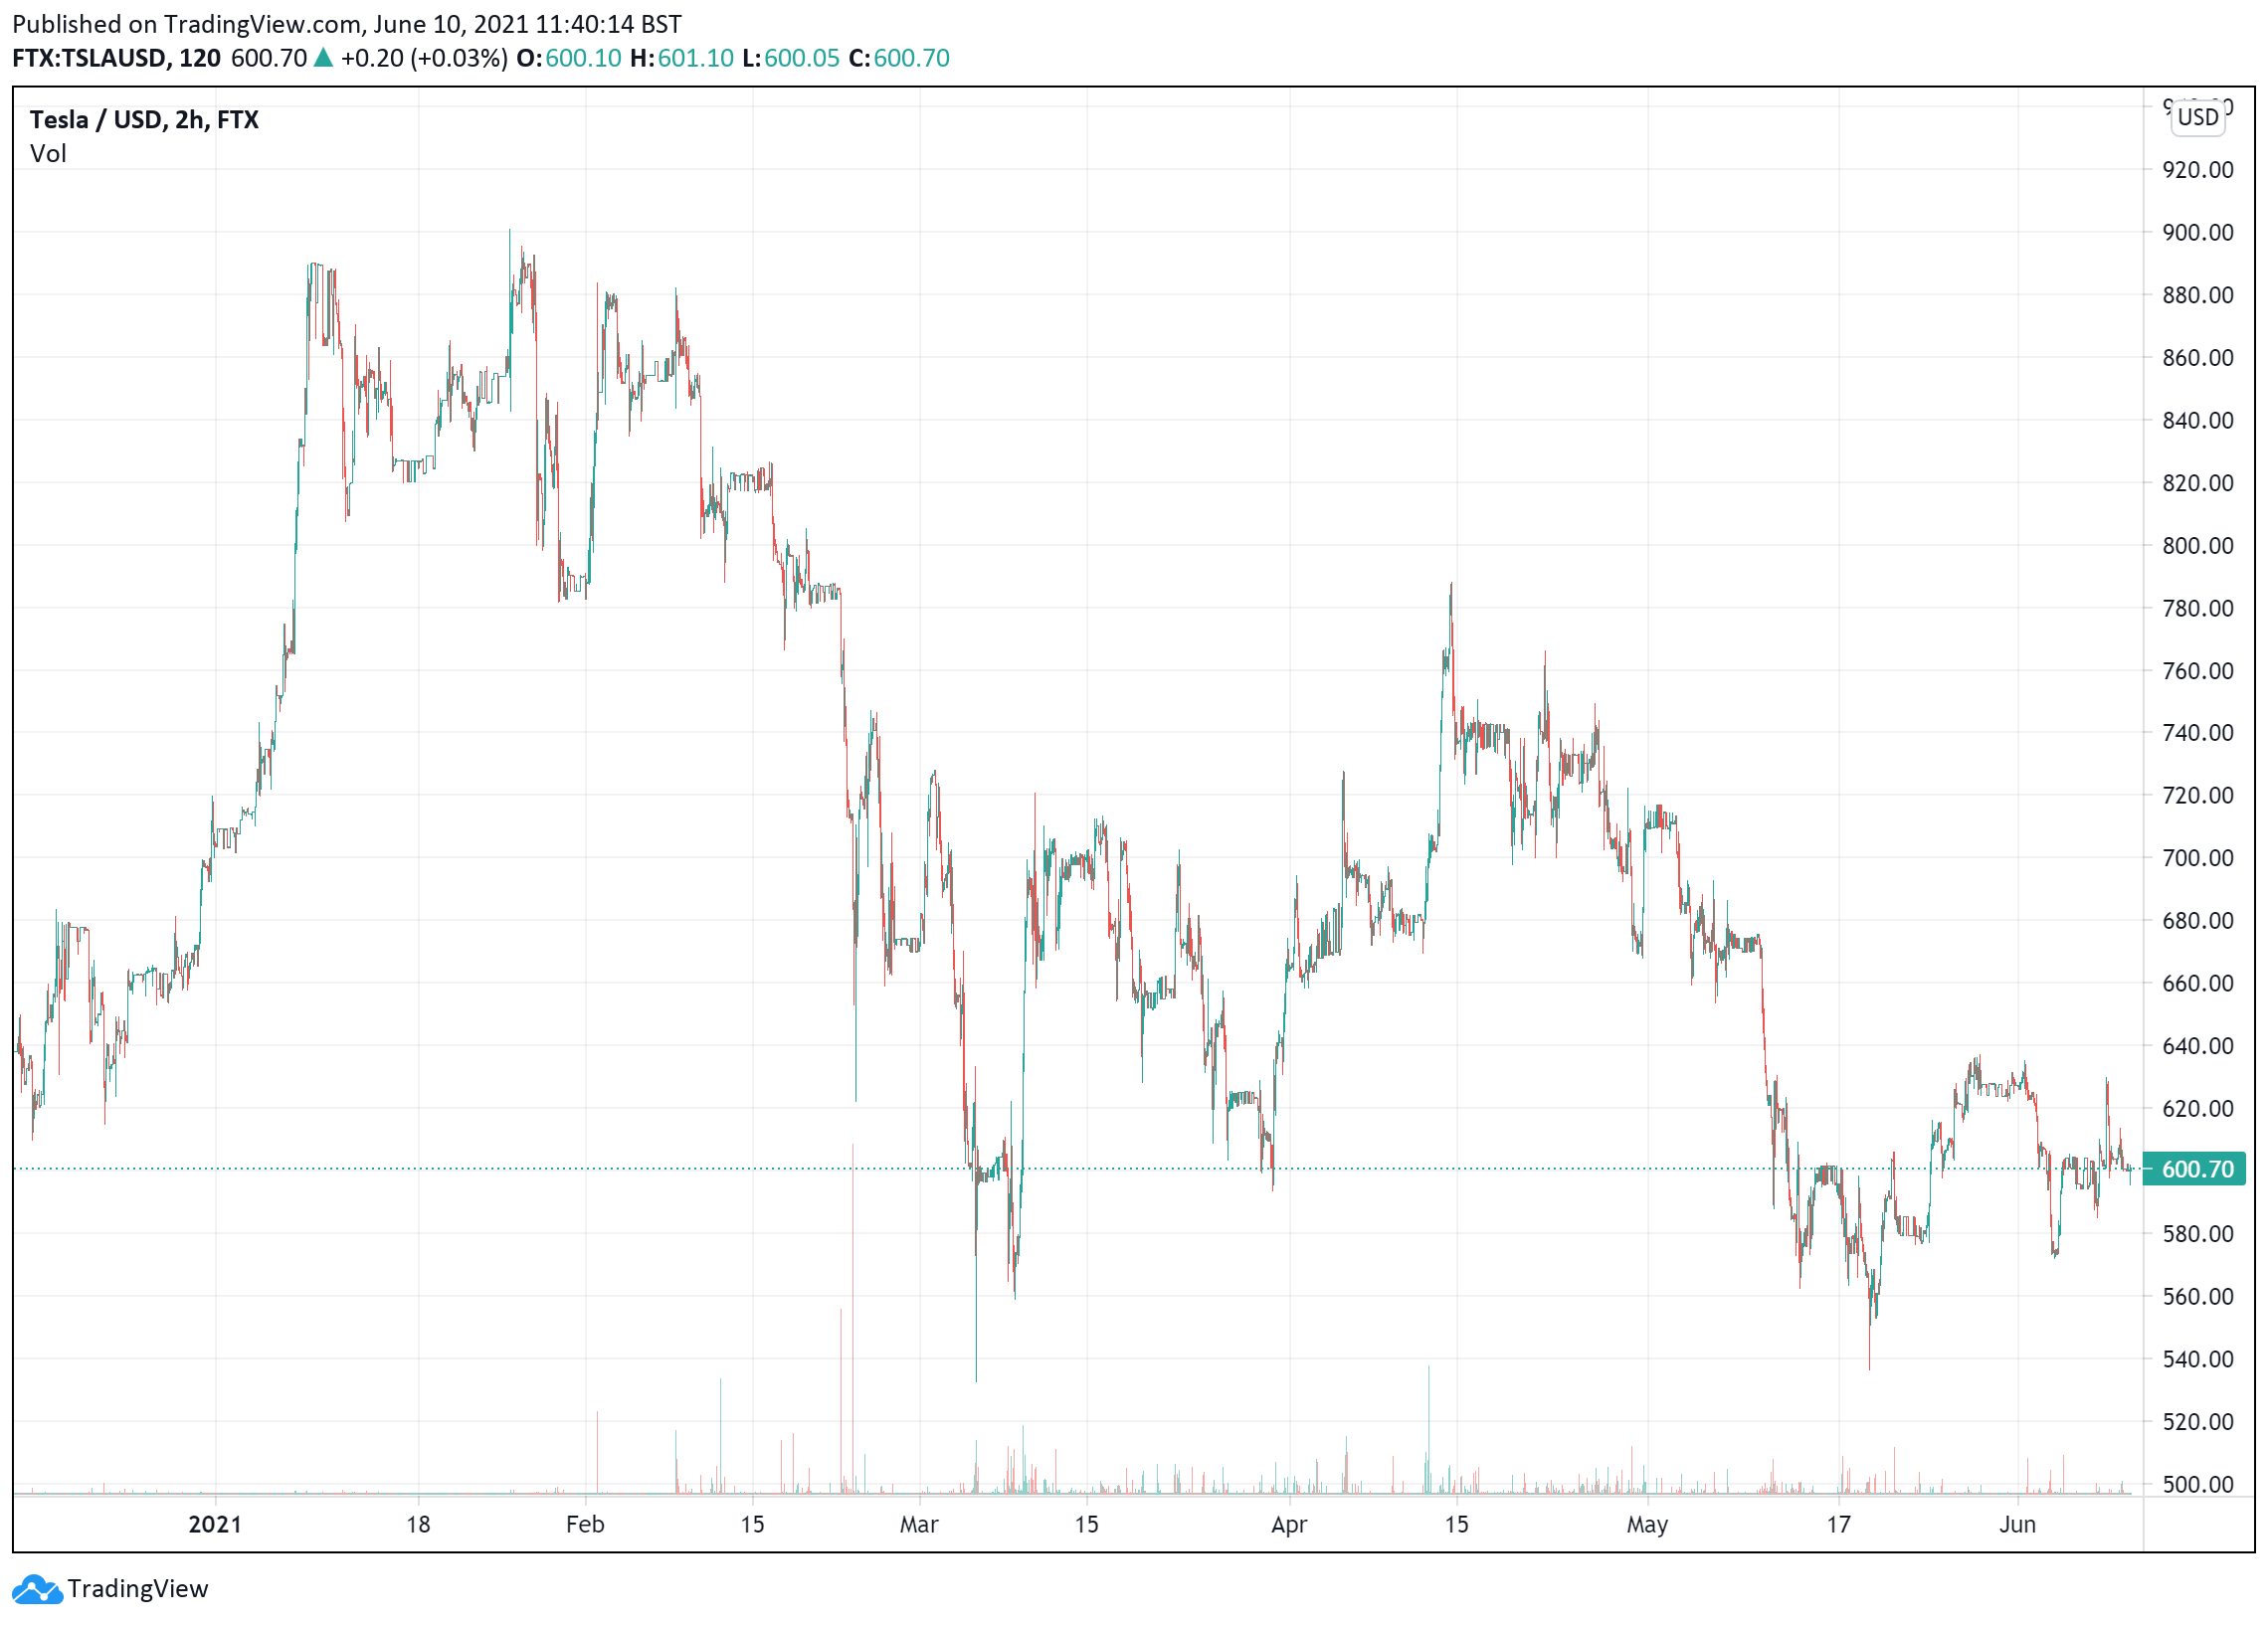 Tesla stock price June 10